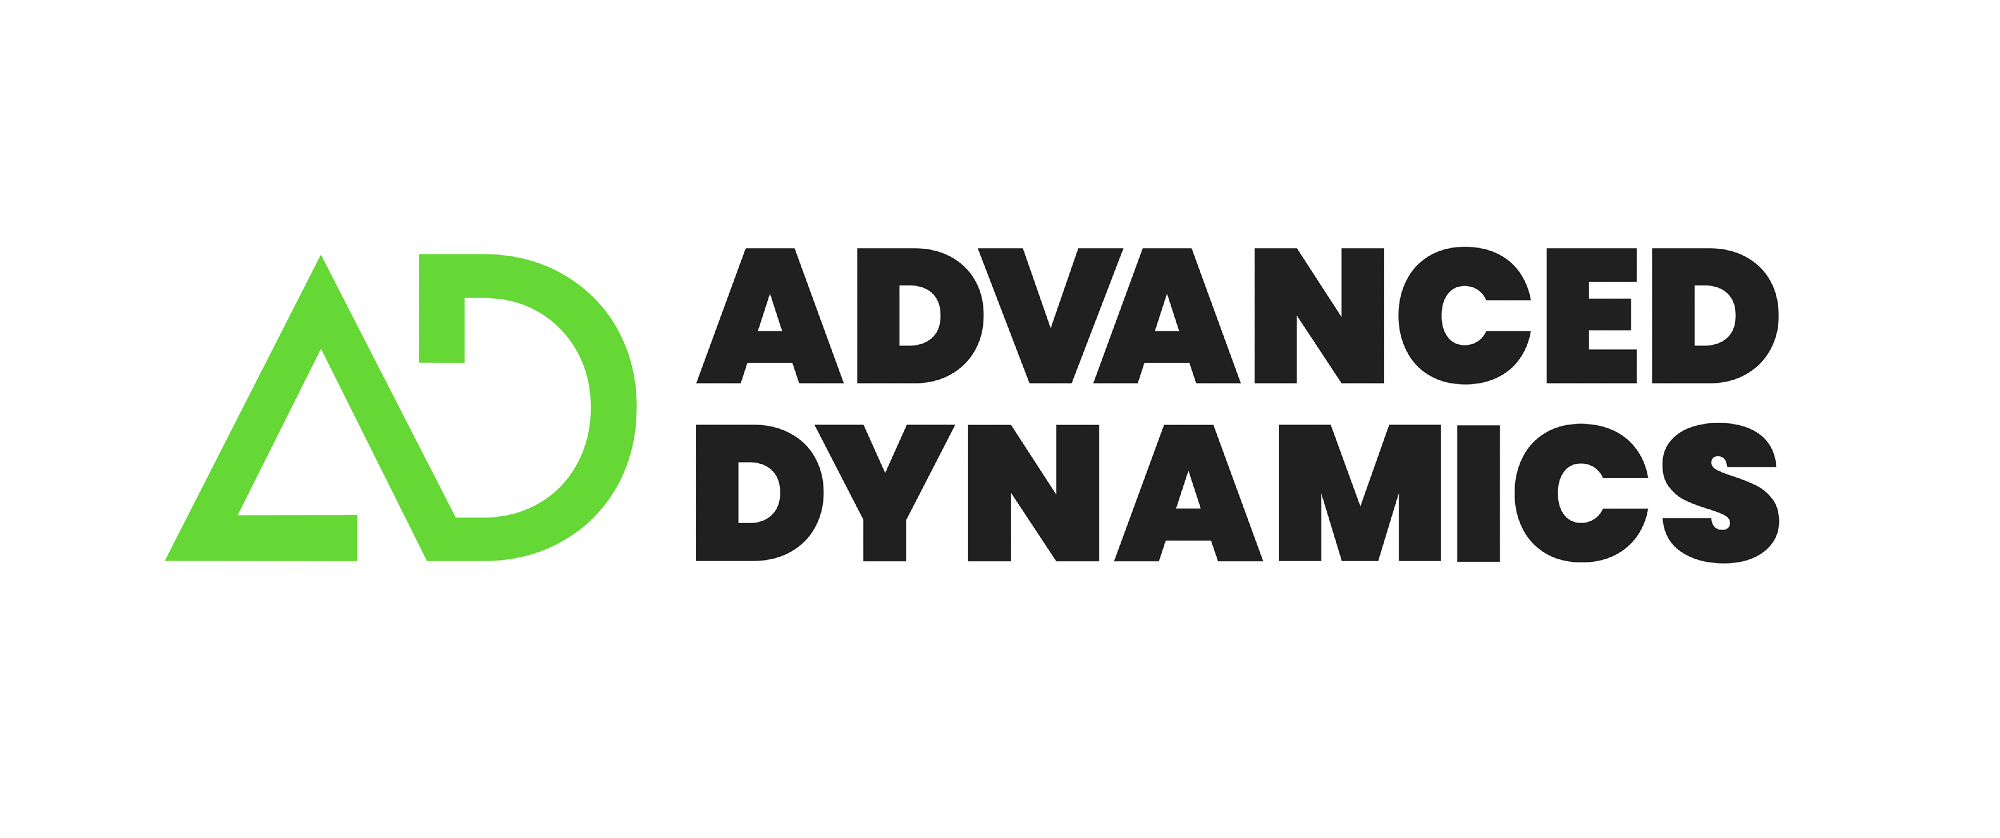 Advanced Dynamics logo.